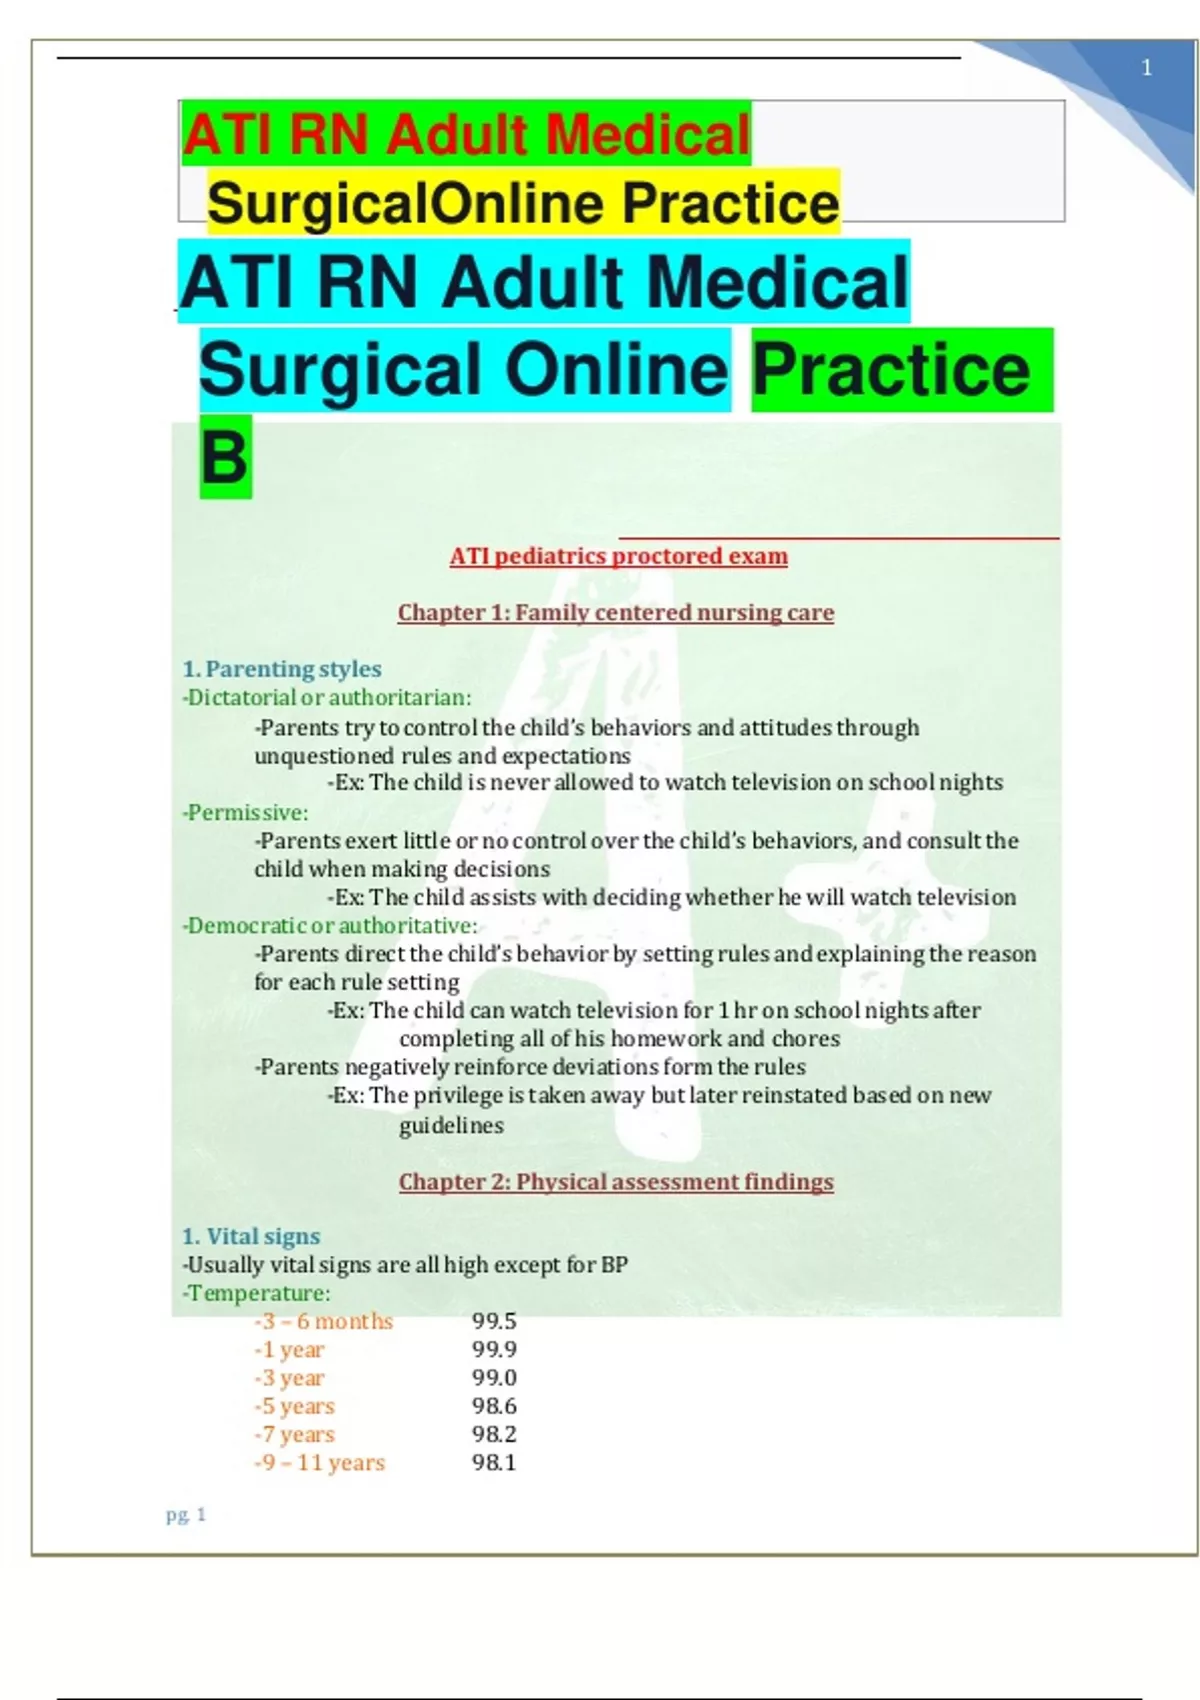 ATI RN Adult Medical Surgical Online Practice/ATI RN Adult Medical